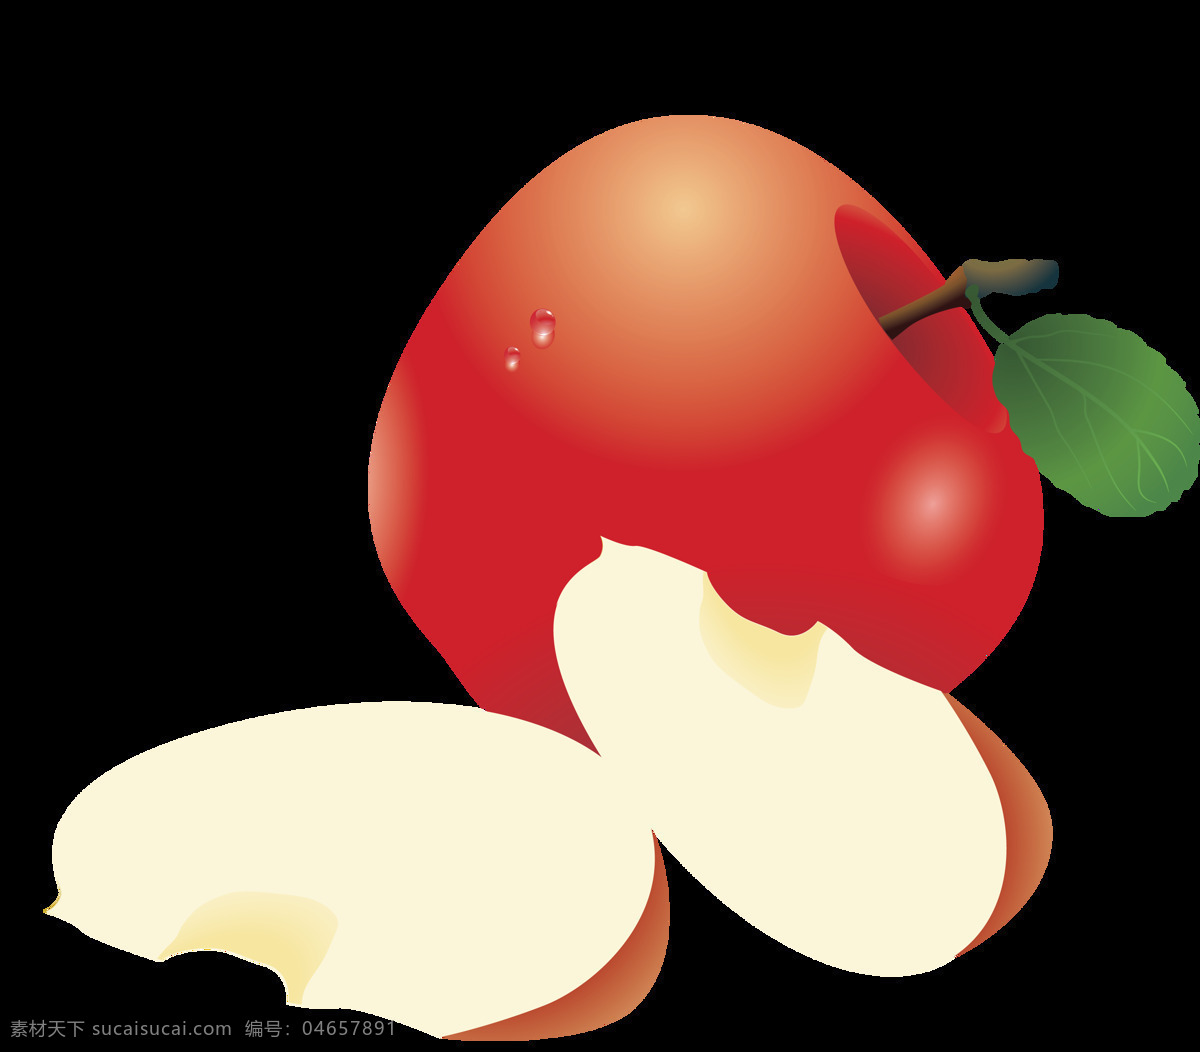 apple 创意水果 高清 红苹果 美味 苹果 苹果设计素材 生物世界 苹果模板下载 叶子 切开 水晶苹果 水果静物 水果 营养 新鲜 新鲜水果 特写 psd源文件